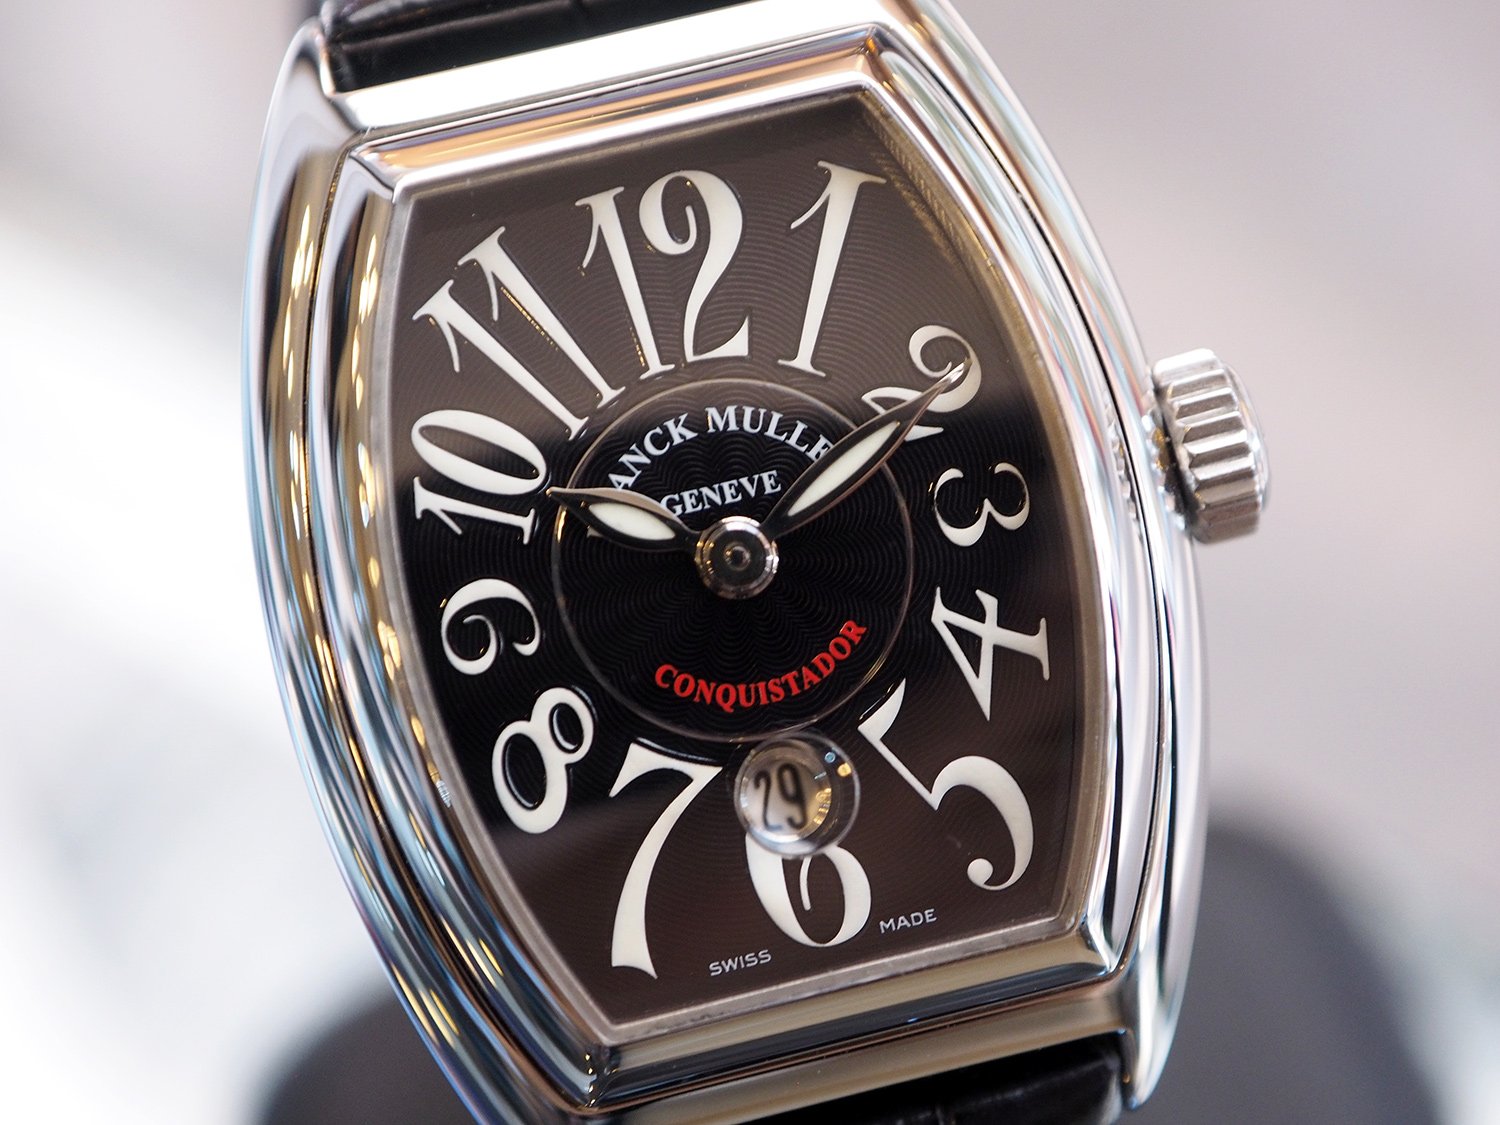 Франк мюллер часы оригинал. Франк Мюллер Женева. Часы Франк Мюллер Geneve. Фрэнк Мюллер Женева часы. Часы Franck Muller 1932.